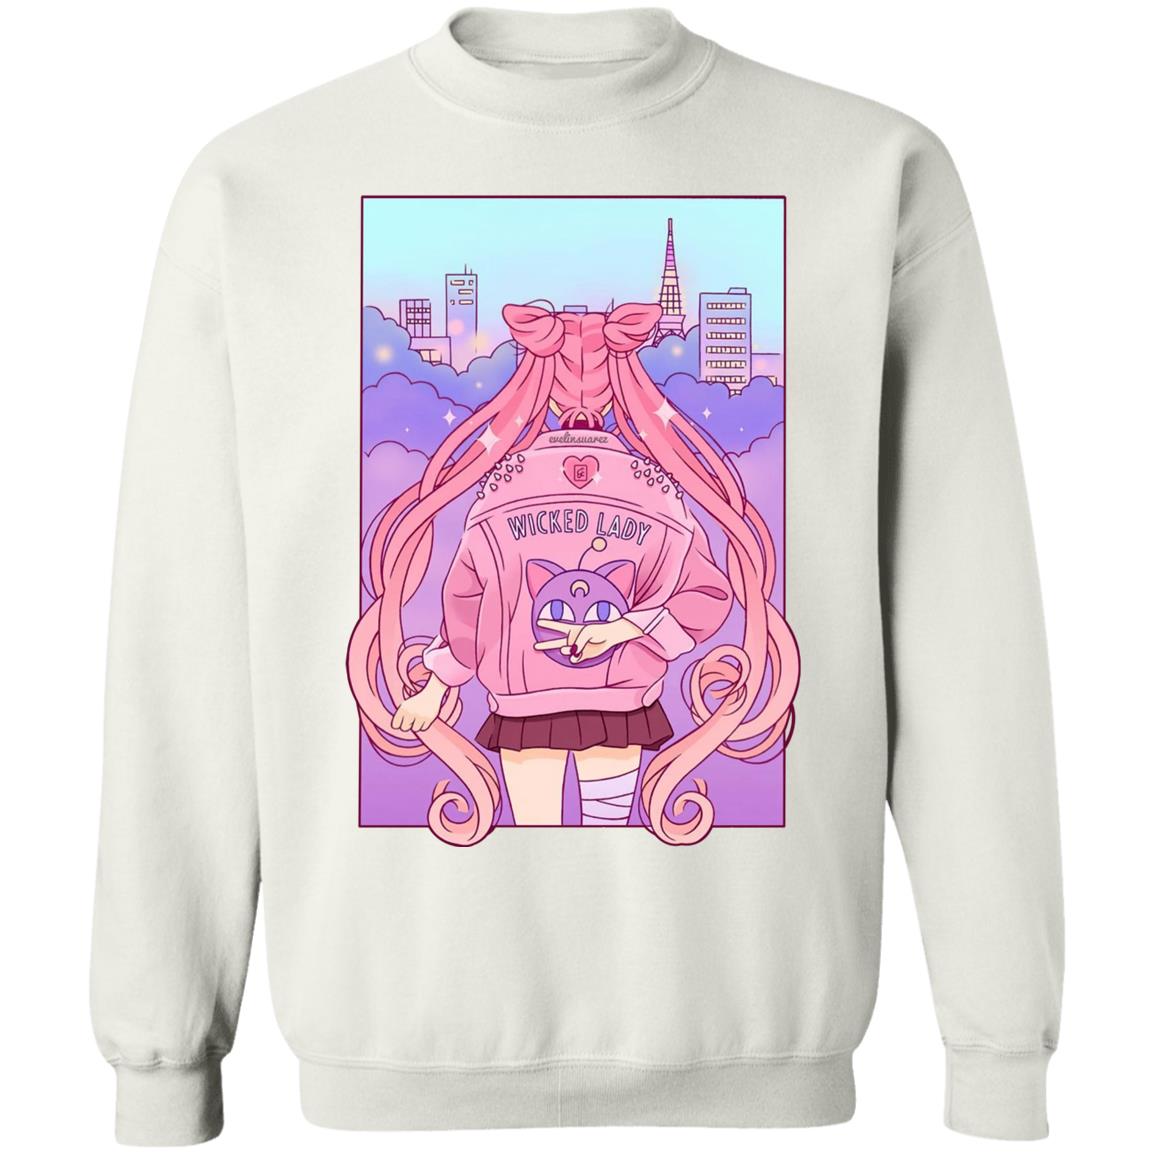 Sailor Moon – Wicked Lady Sweatshirt